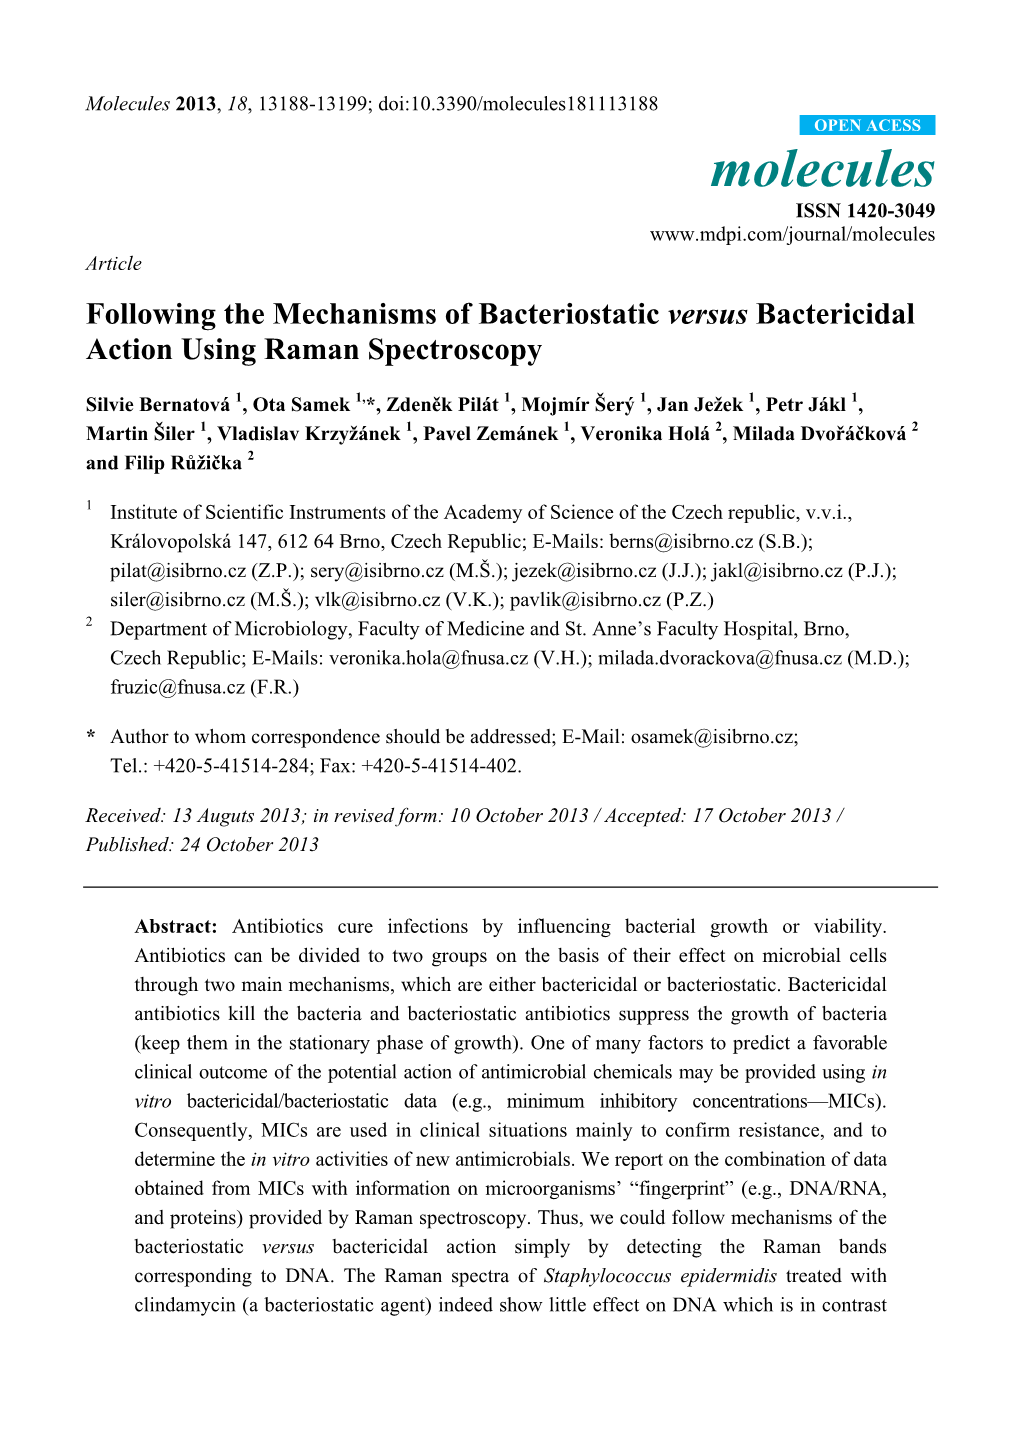 Following the Mechanisms of Bacteriostatic Versus Bactericidal Action Using Raman Spectroscopy